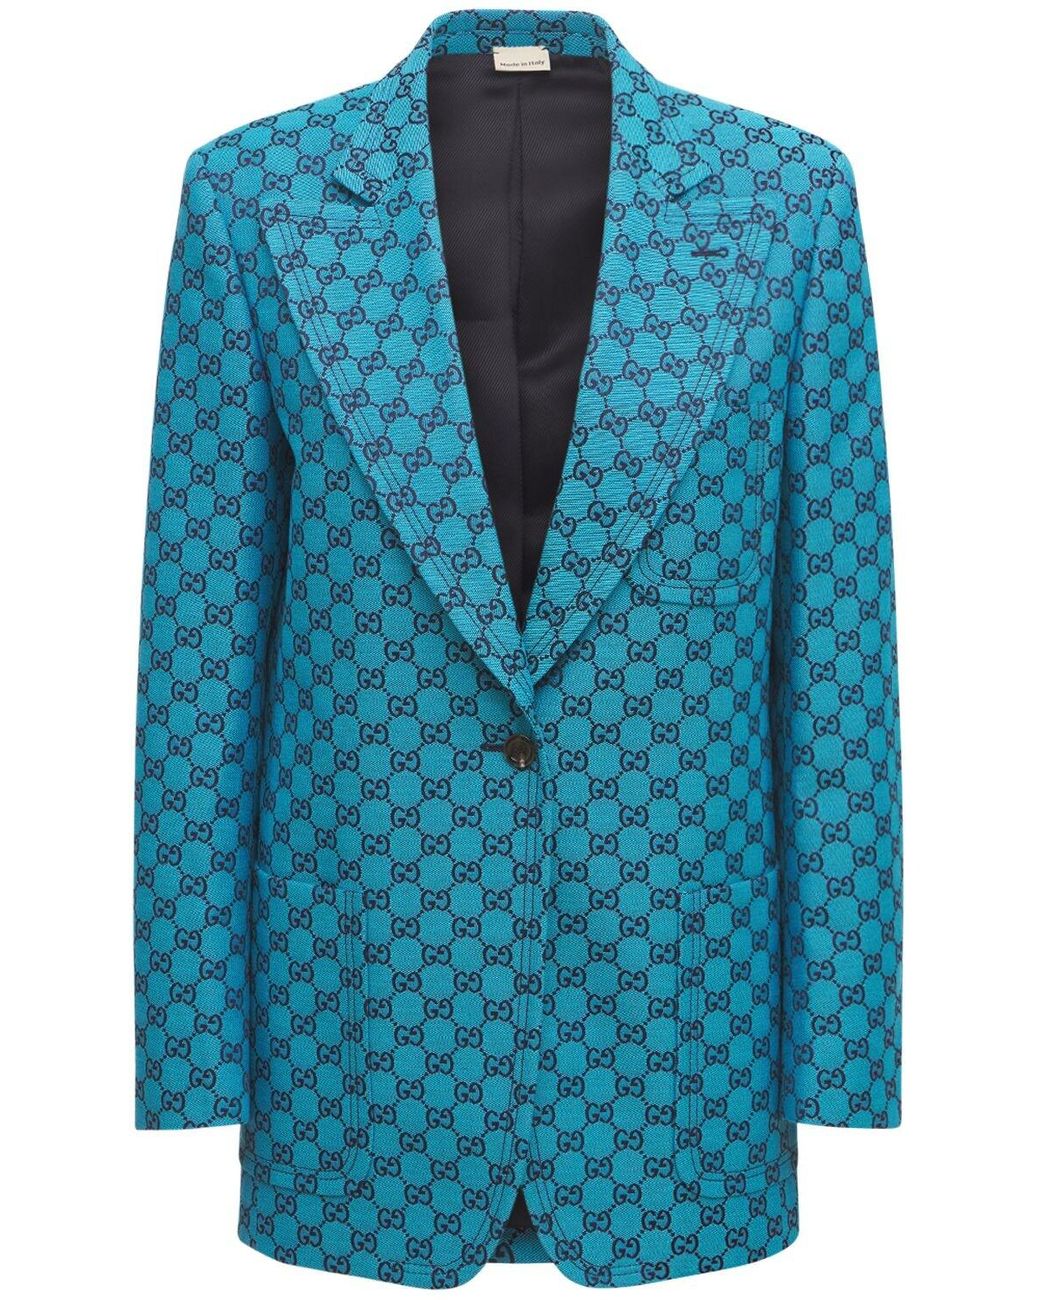 Gucci Gg Multicolor Cotton Blend Jacket in Light Blue (Blue) - Lyst